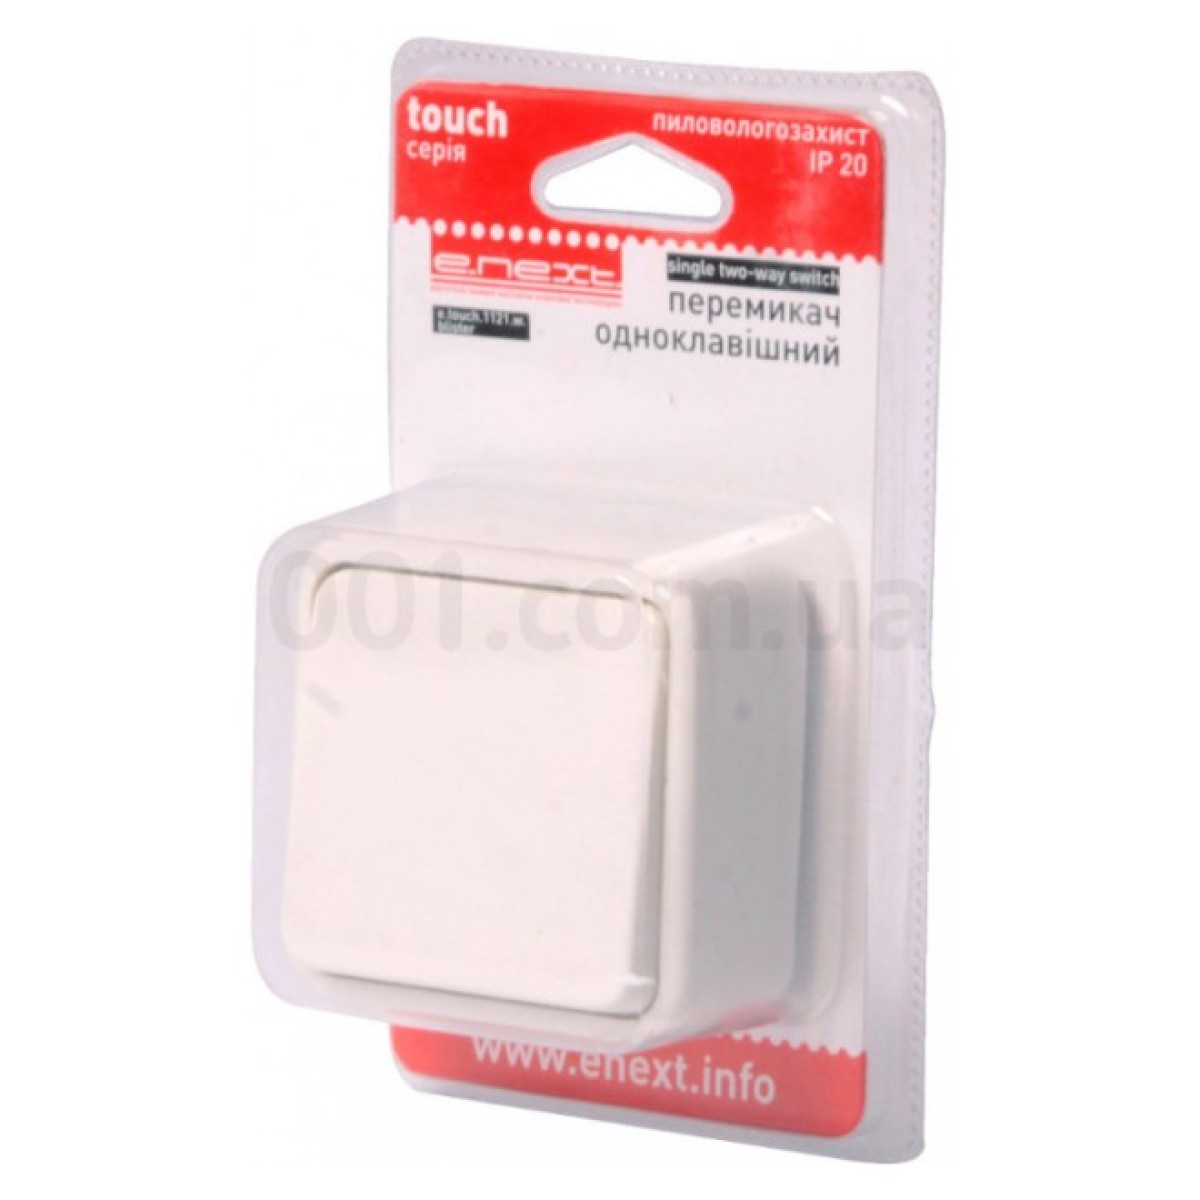 Выключатель двухклавишный (блистерная упаковка) белый e.touch.1112.w.blister серия e.touch, E.NEXT 98_98.jpg - фото 3